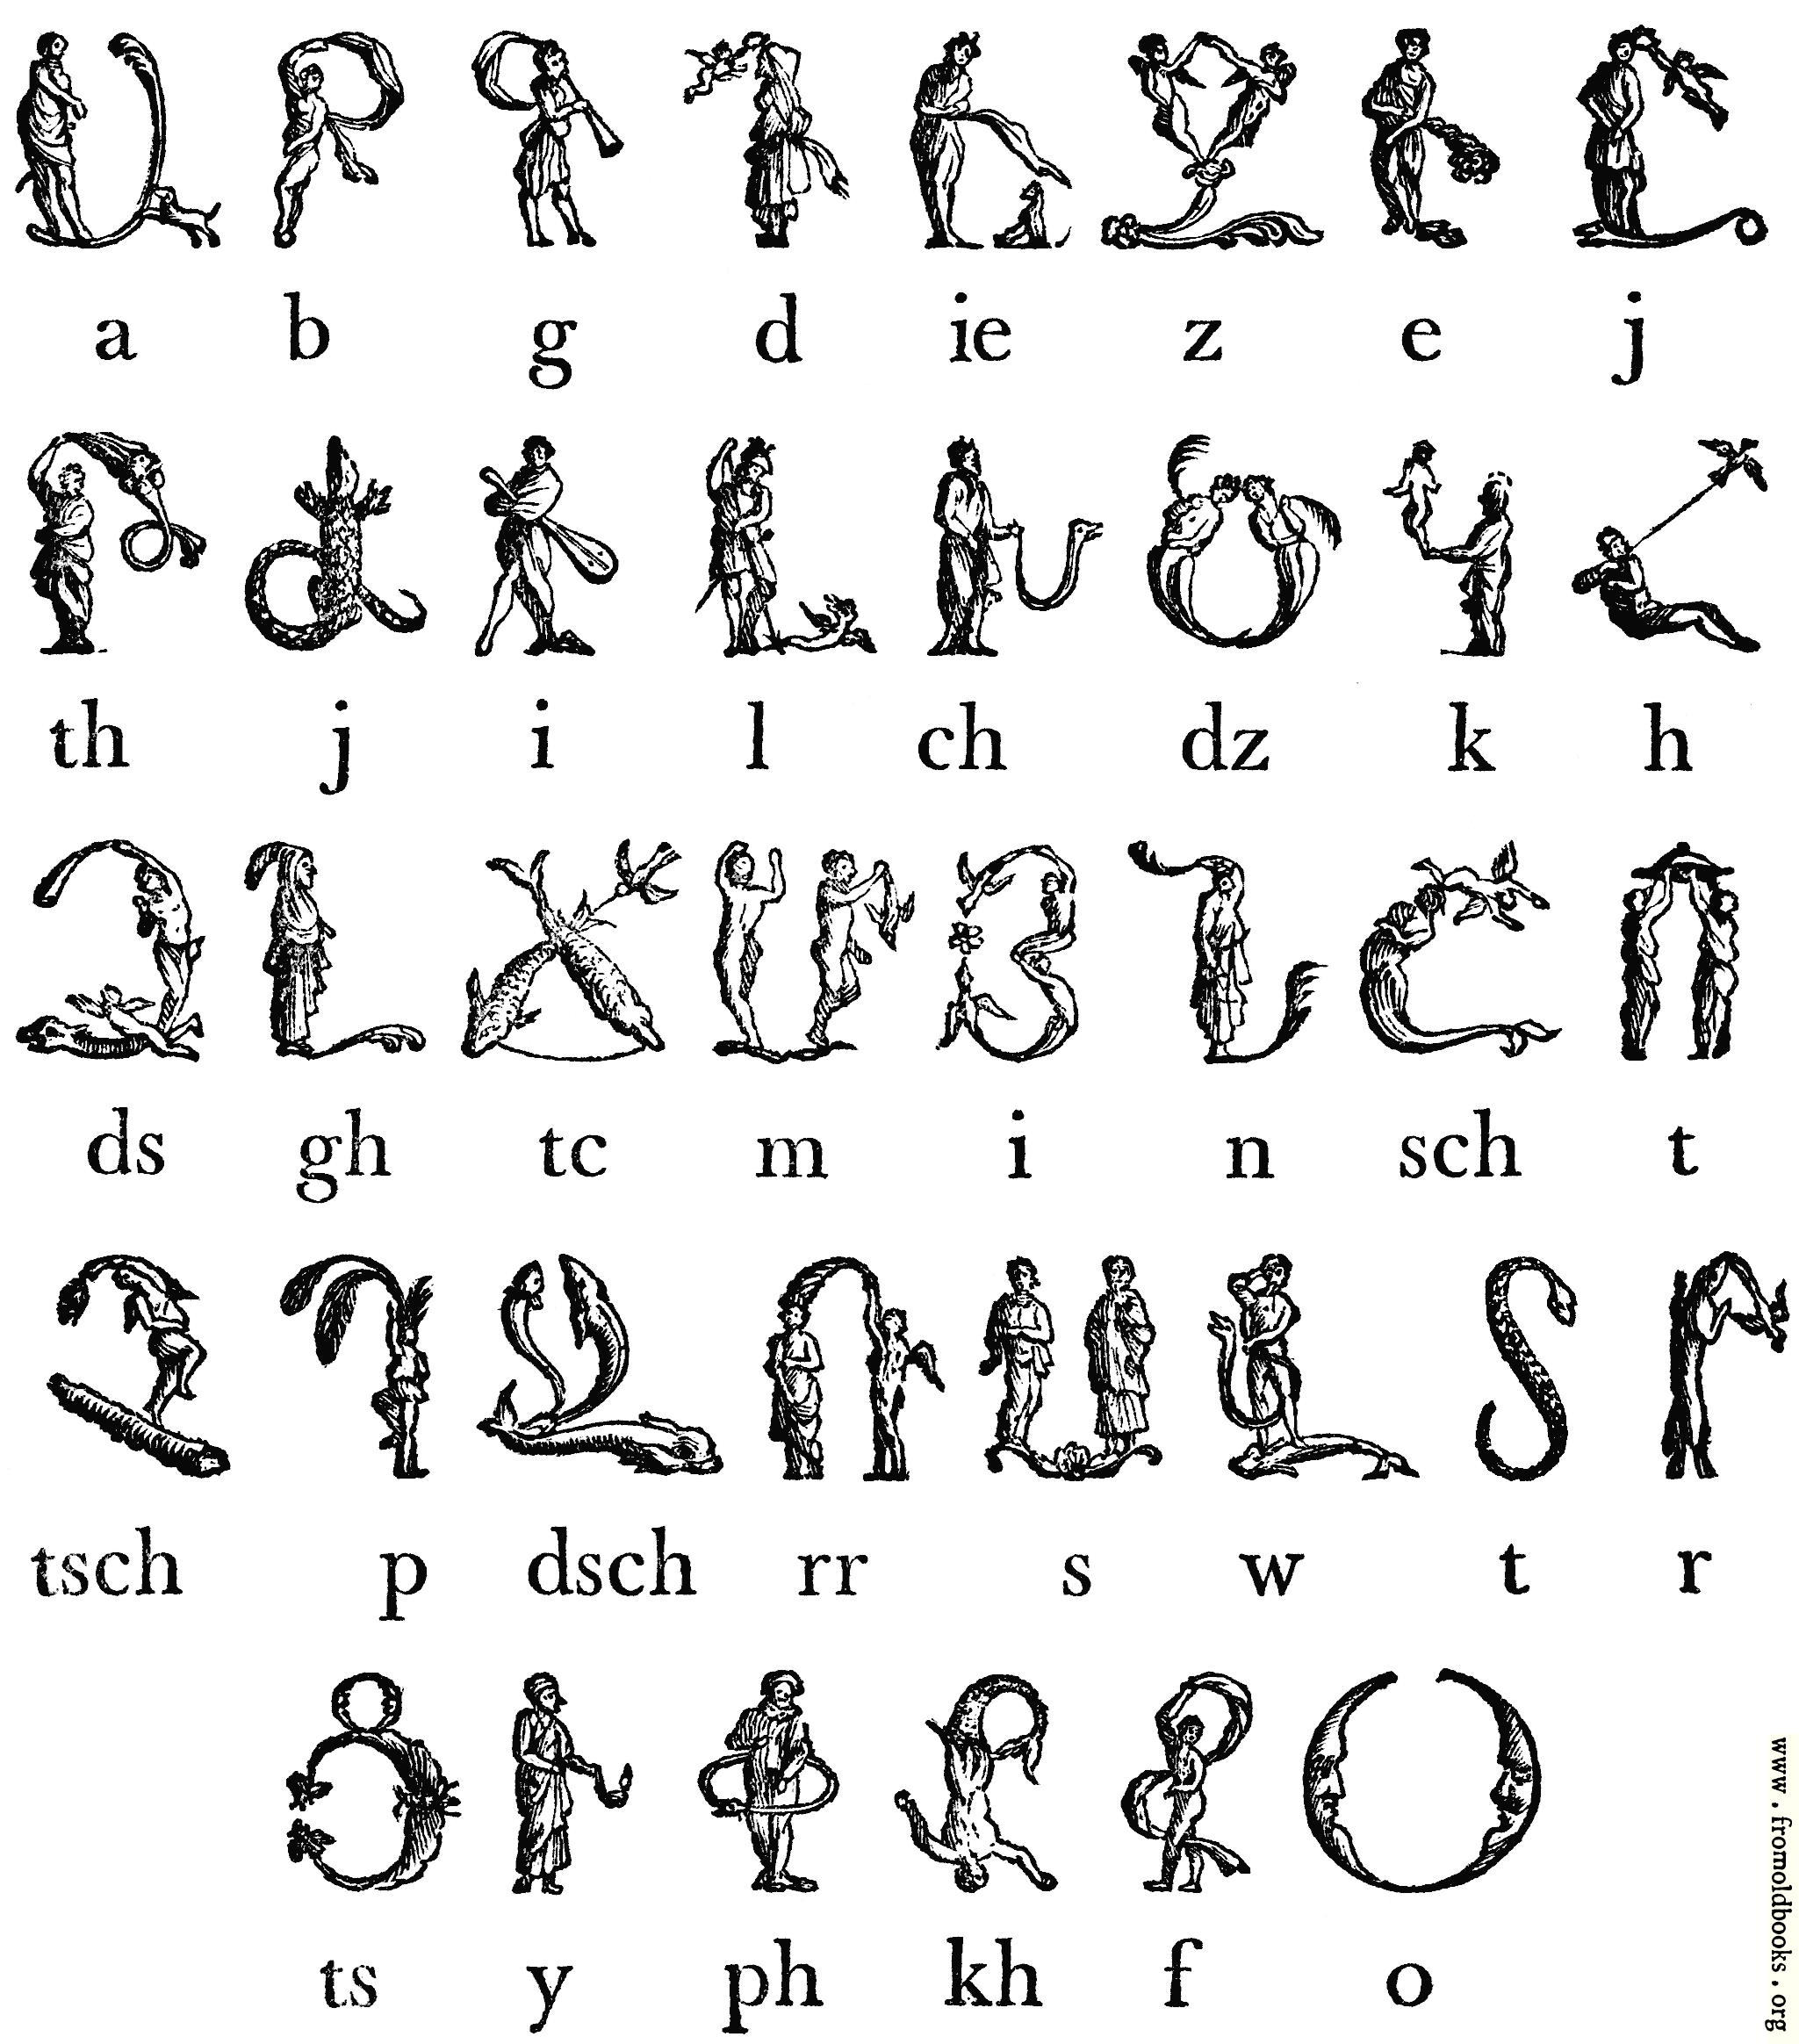 [Picture: Armenian Figure Alphabet from p. 12]